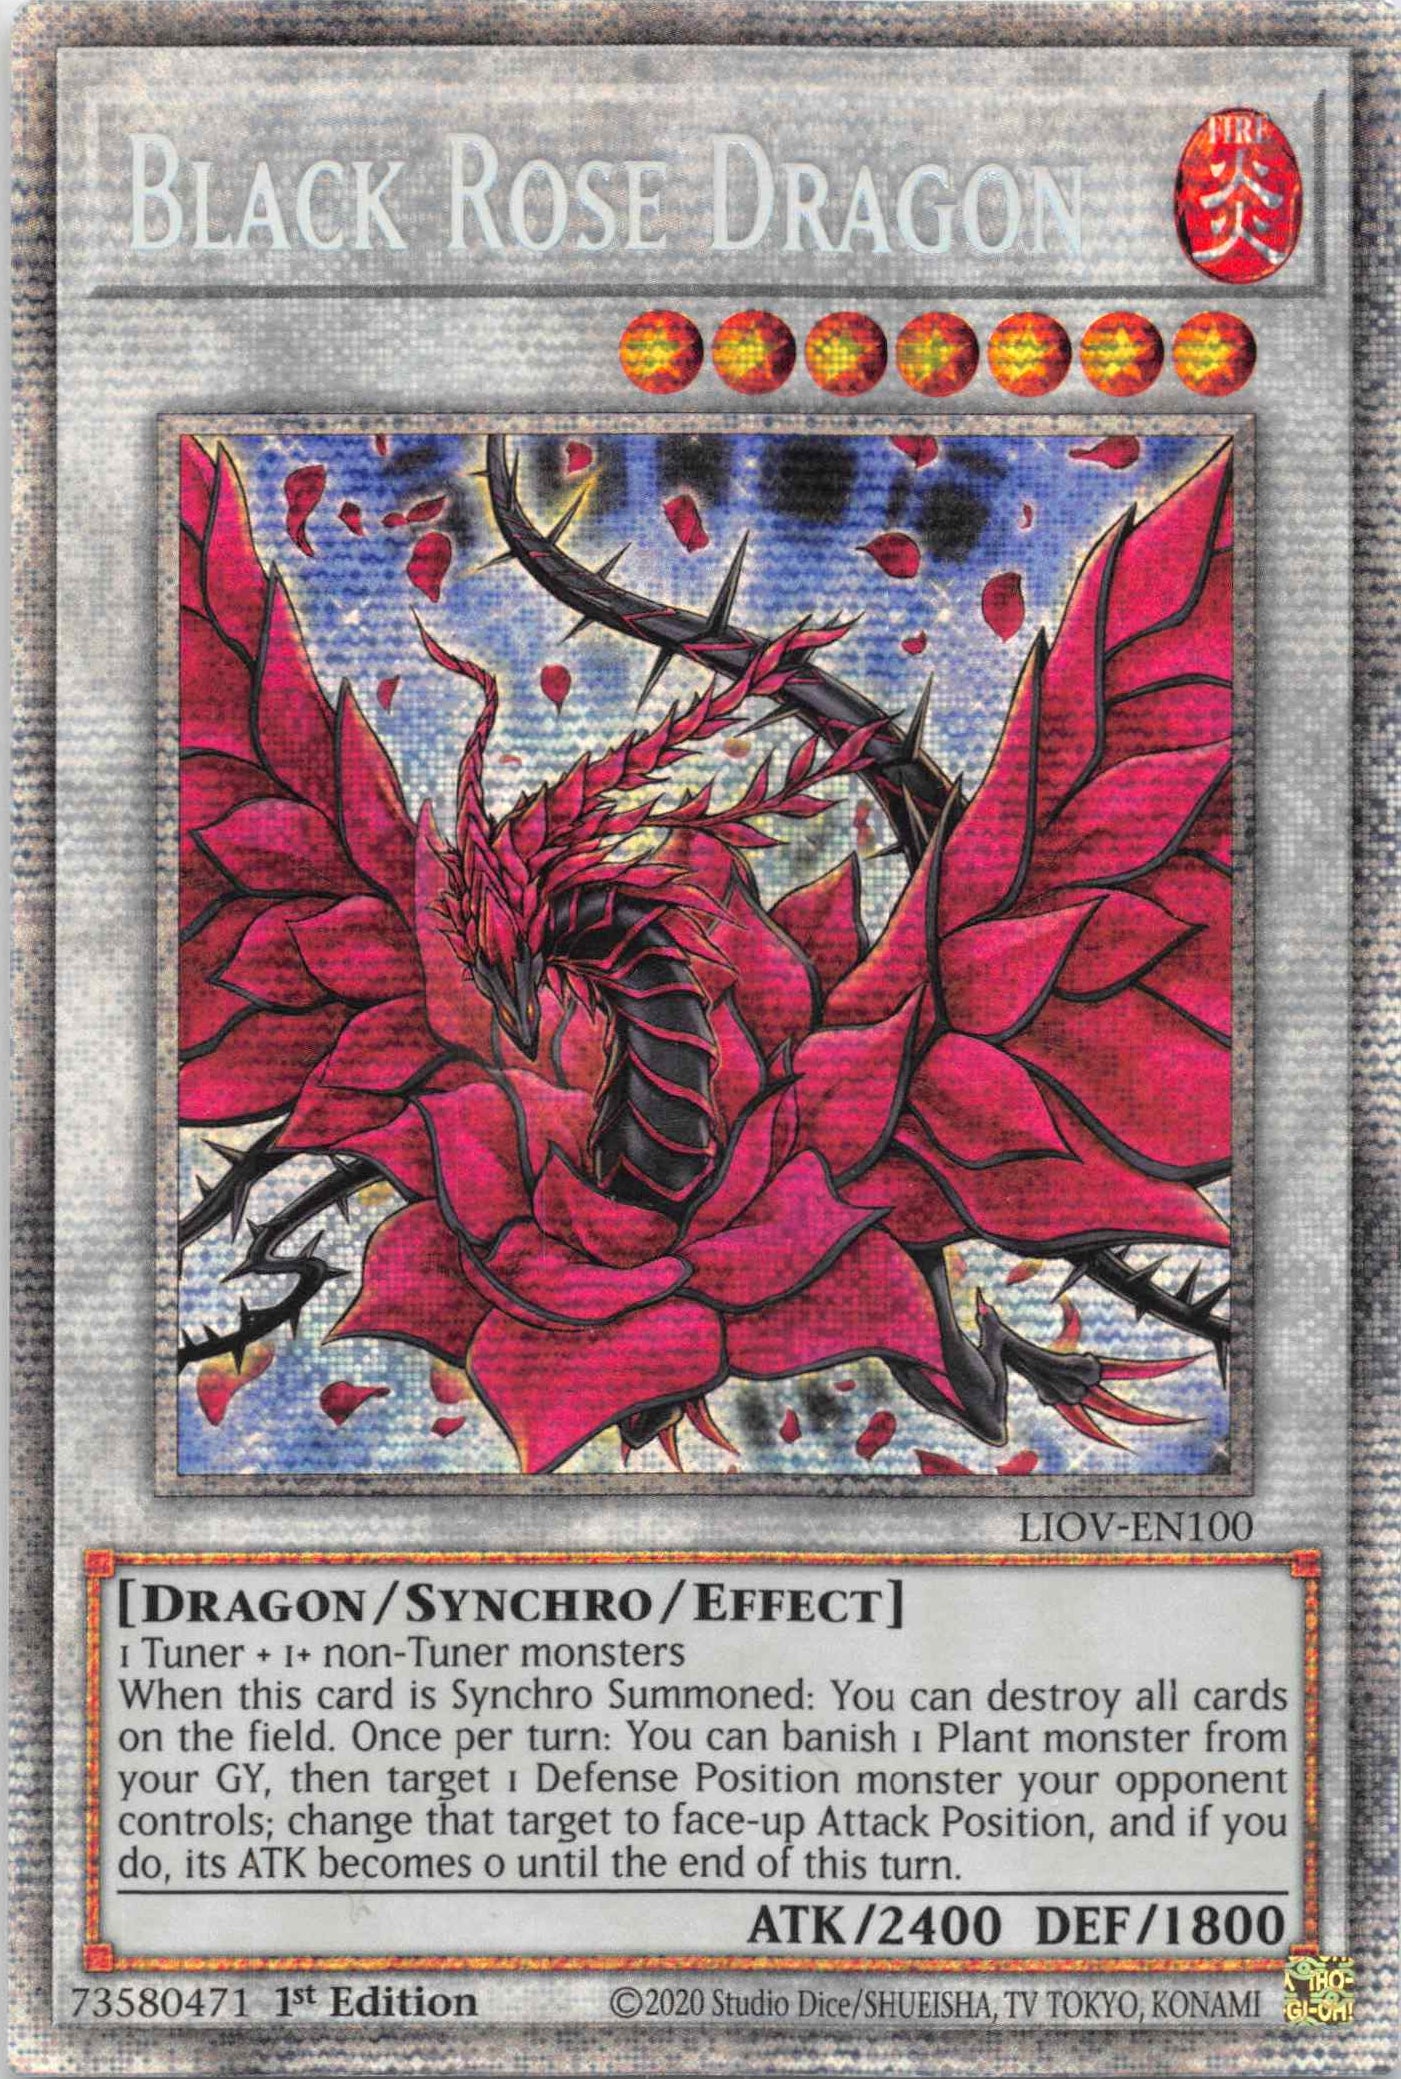 Black Rose Dragon [LIOV-EN100] Starlight Rare | Shuffle n Cut Hobbies & Games